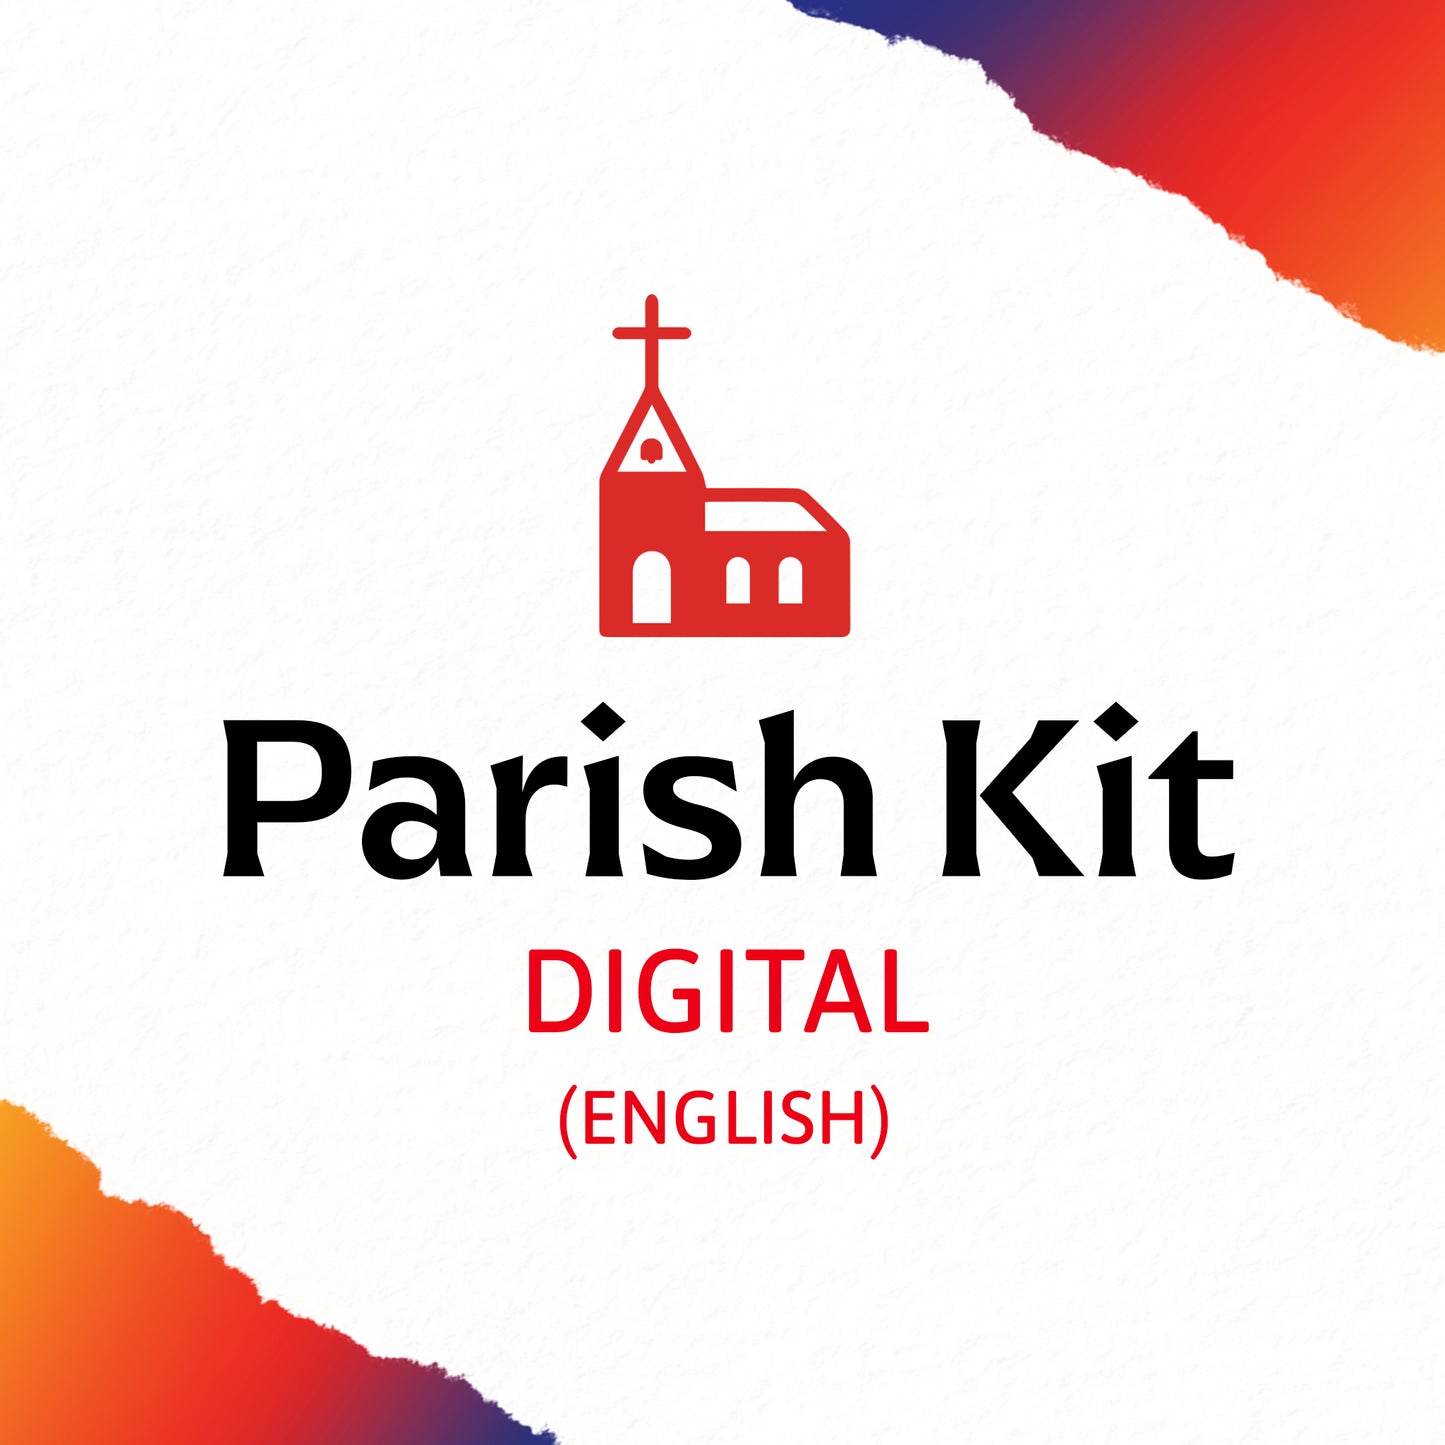 Parish Kit Digital Download - English